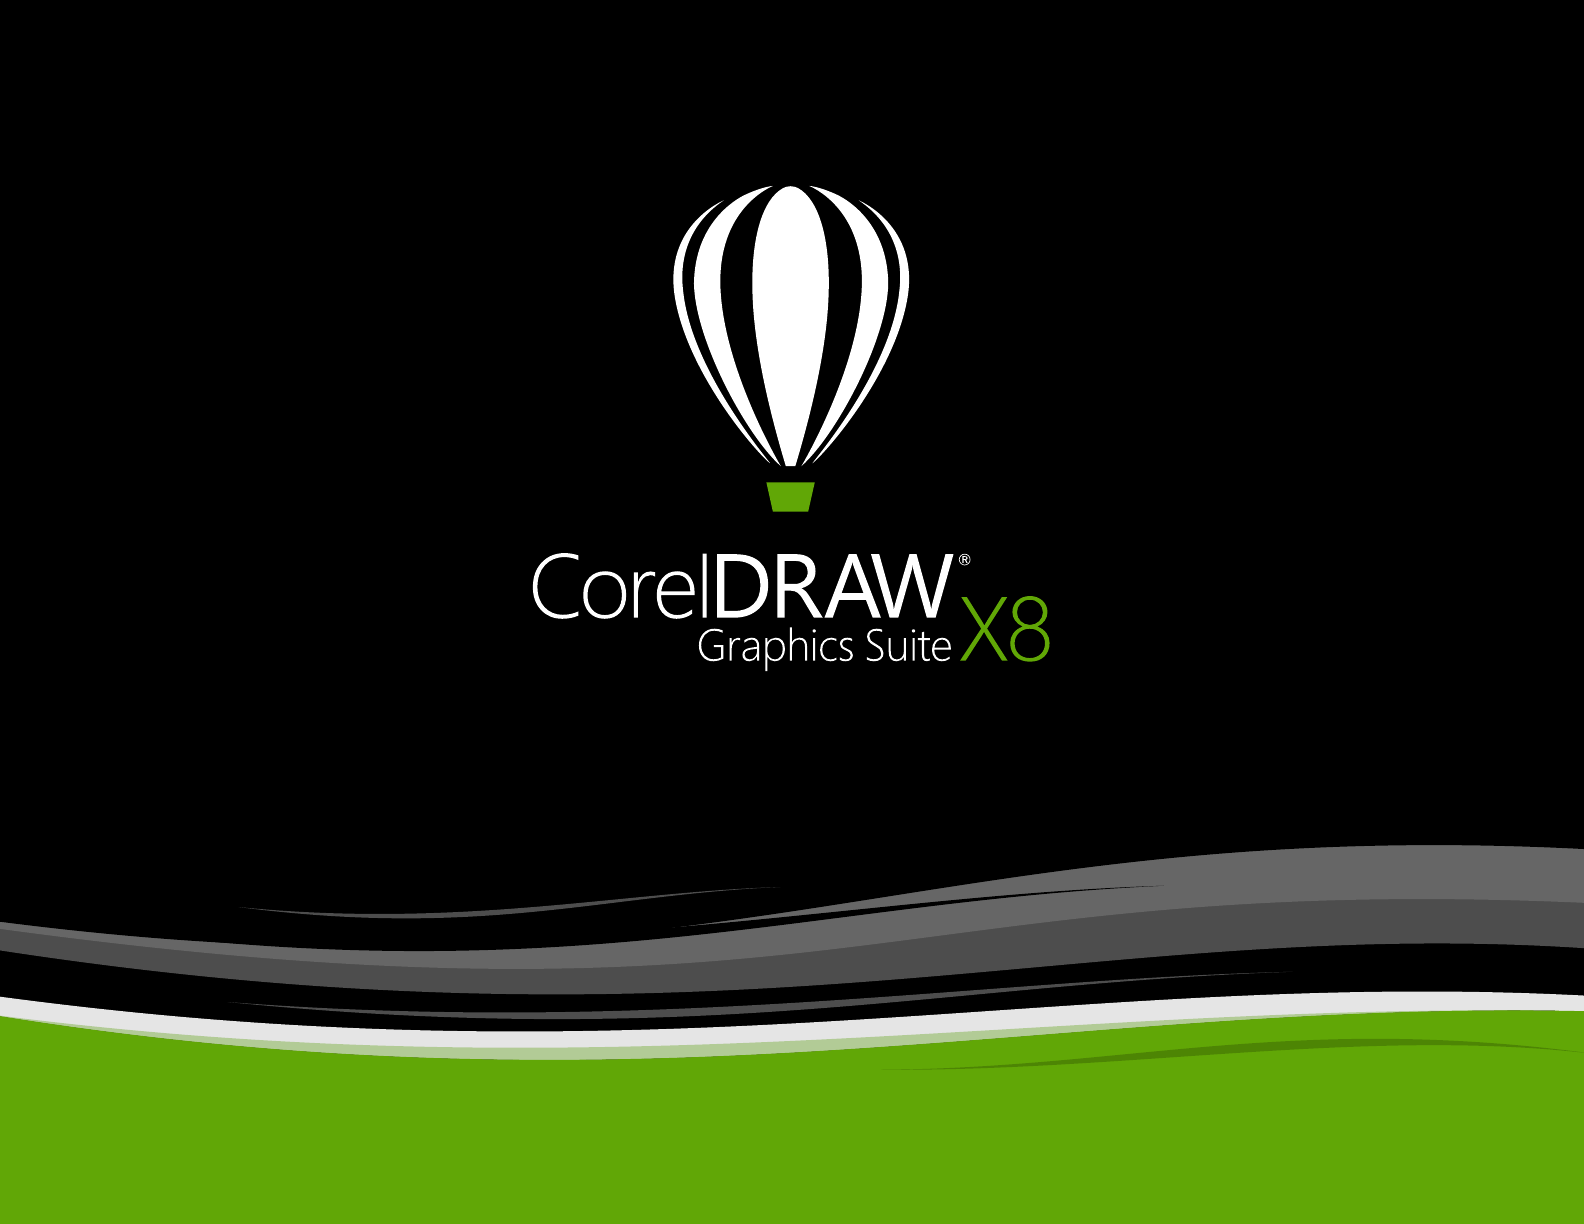 coreldraw graphics suite x6 user guide